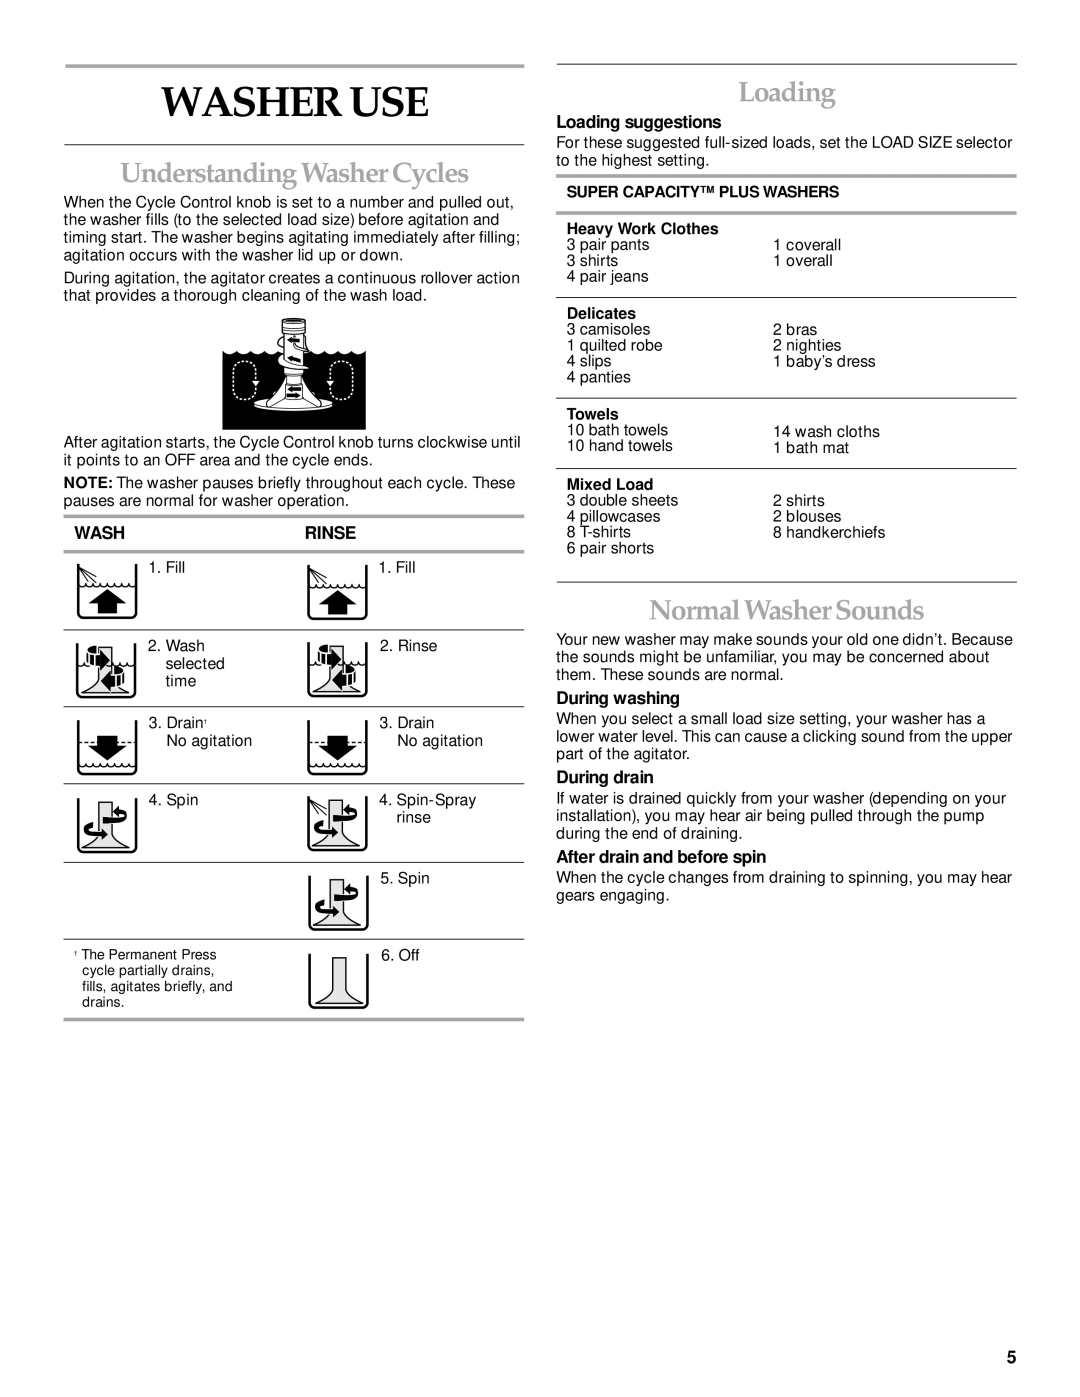 KitchenAid KAWS855J manual Washer Use, Understanding Washer Cycles, NormalWasherSounds, Washrinse, Loading suggestions 